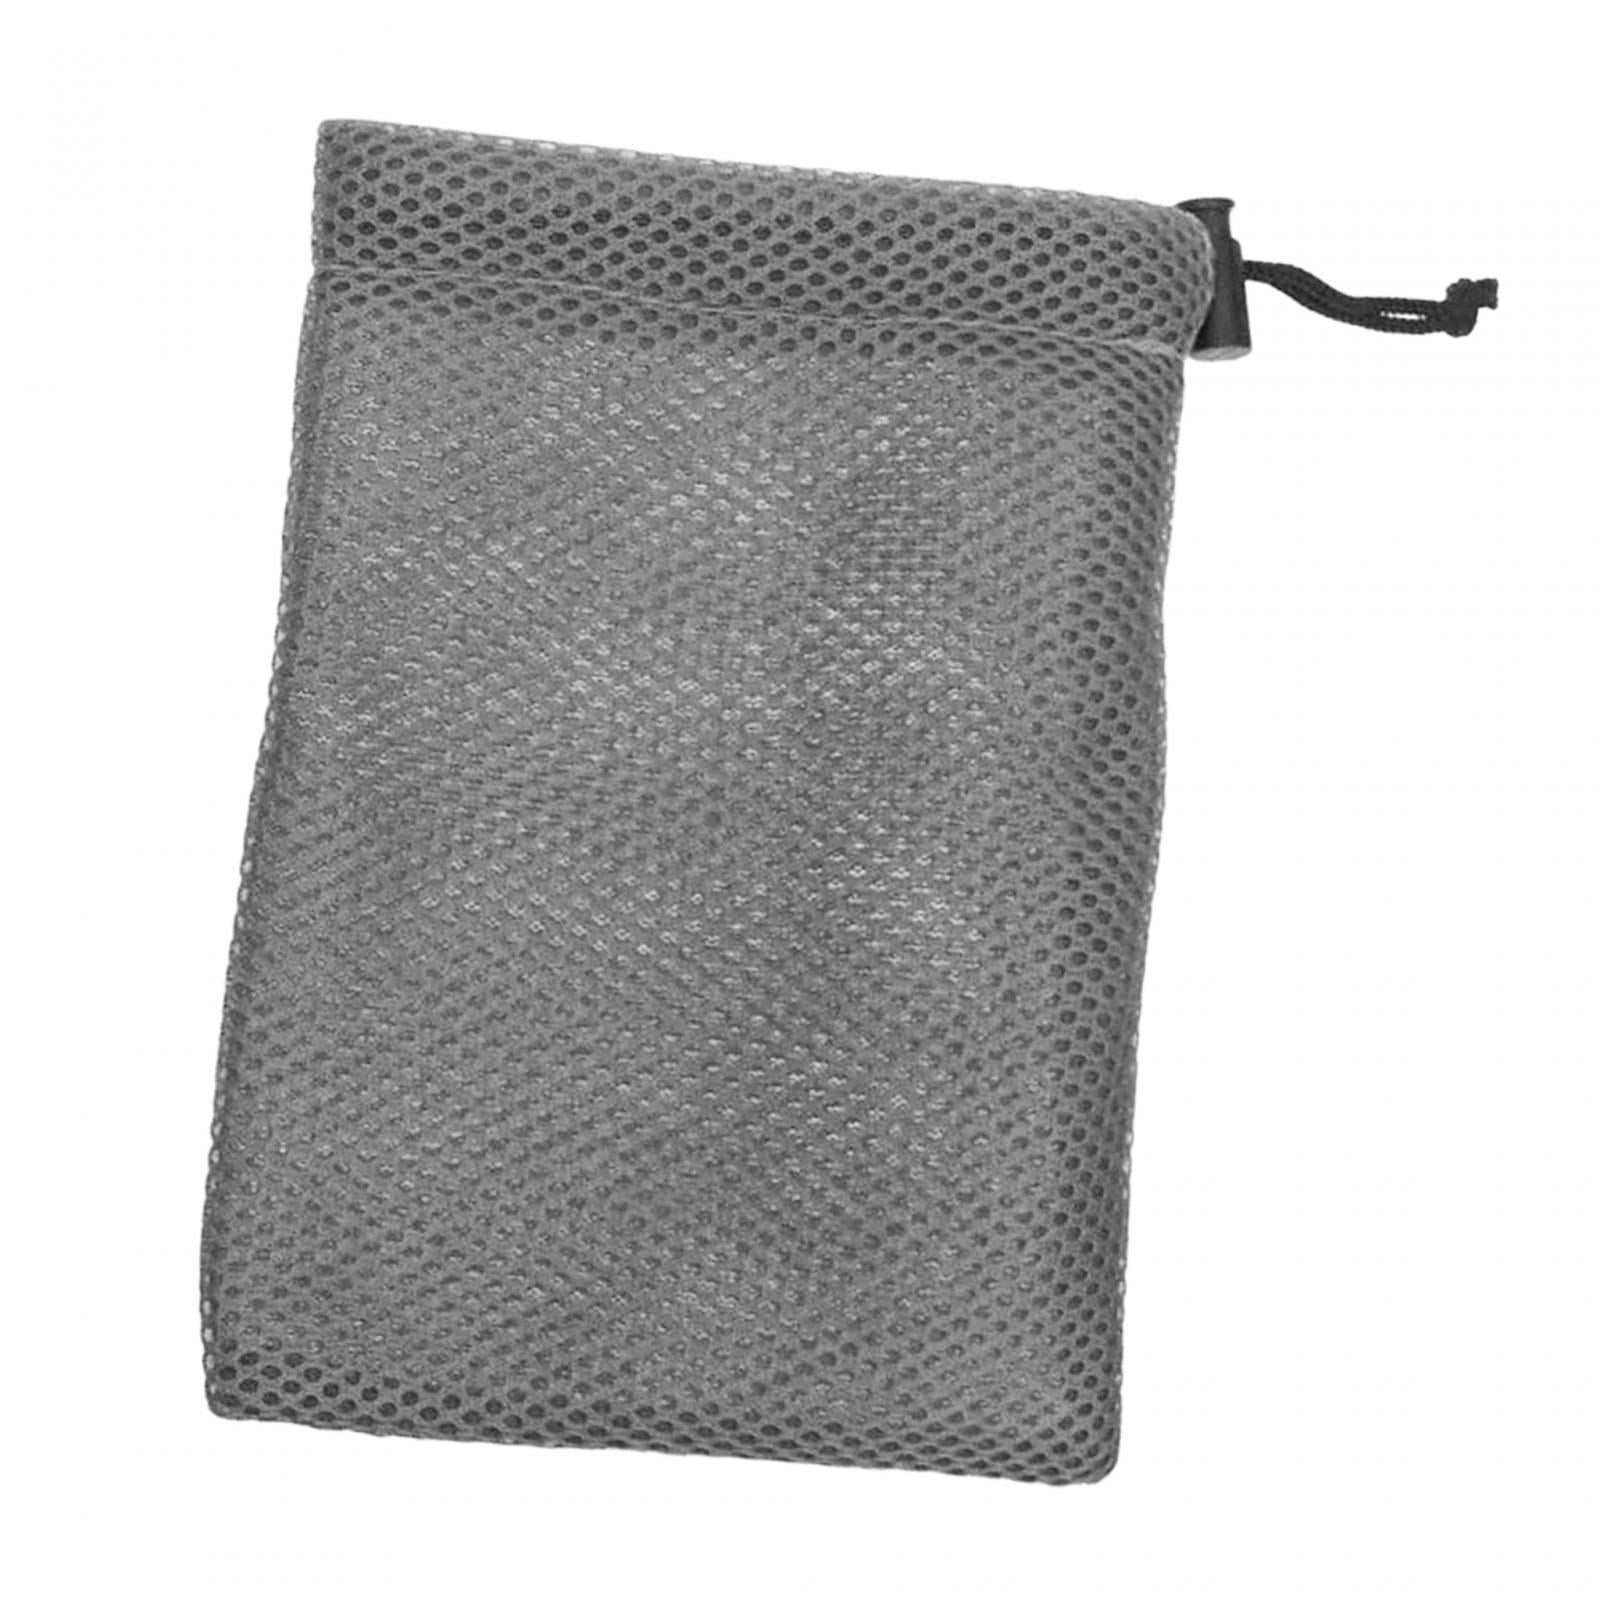 Small Mesh Drawstring Bag Storage Pouch Lightweight Stuff Sack Mesh Bag ...